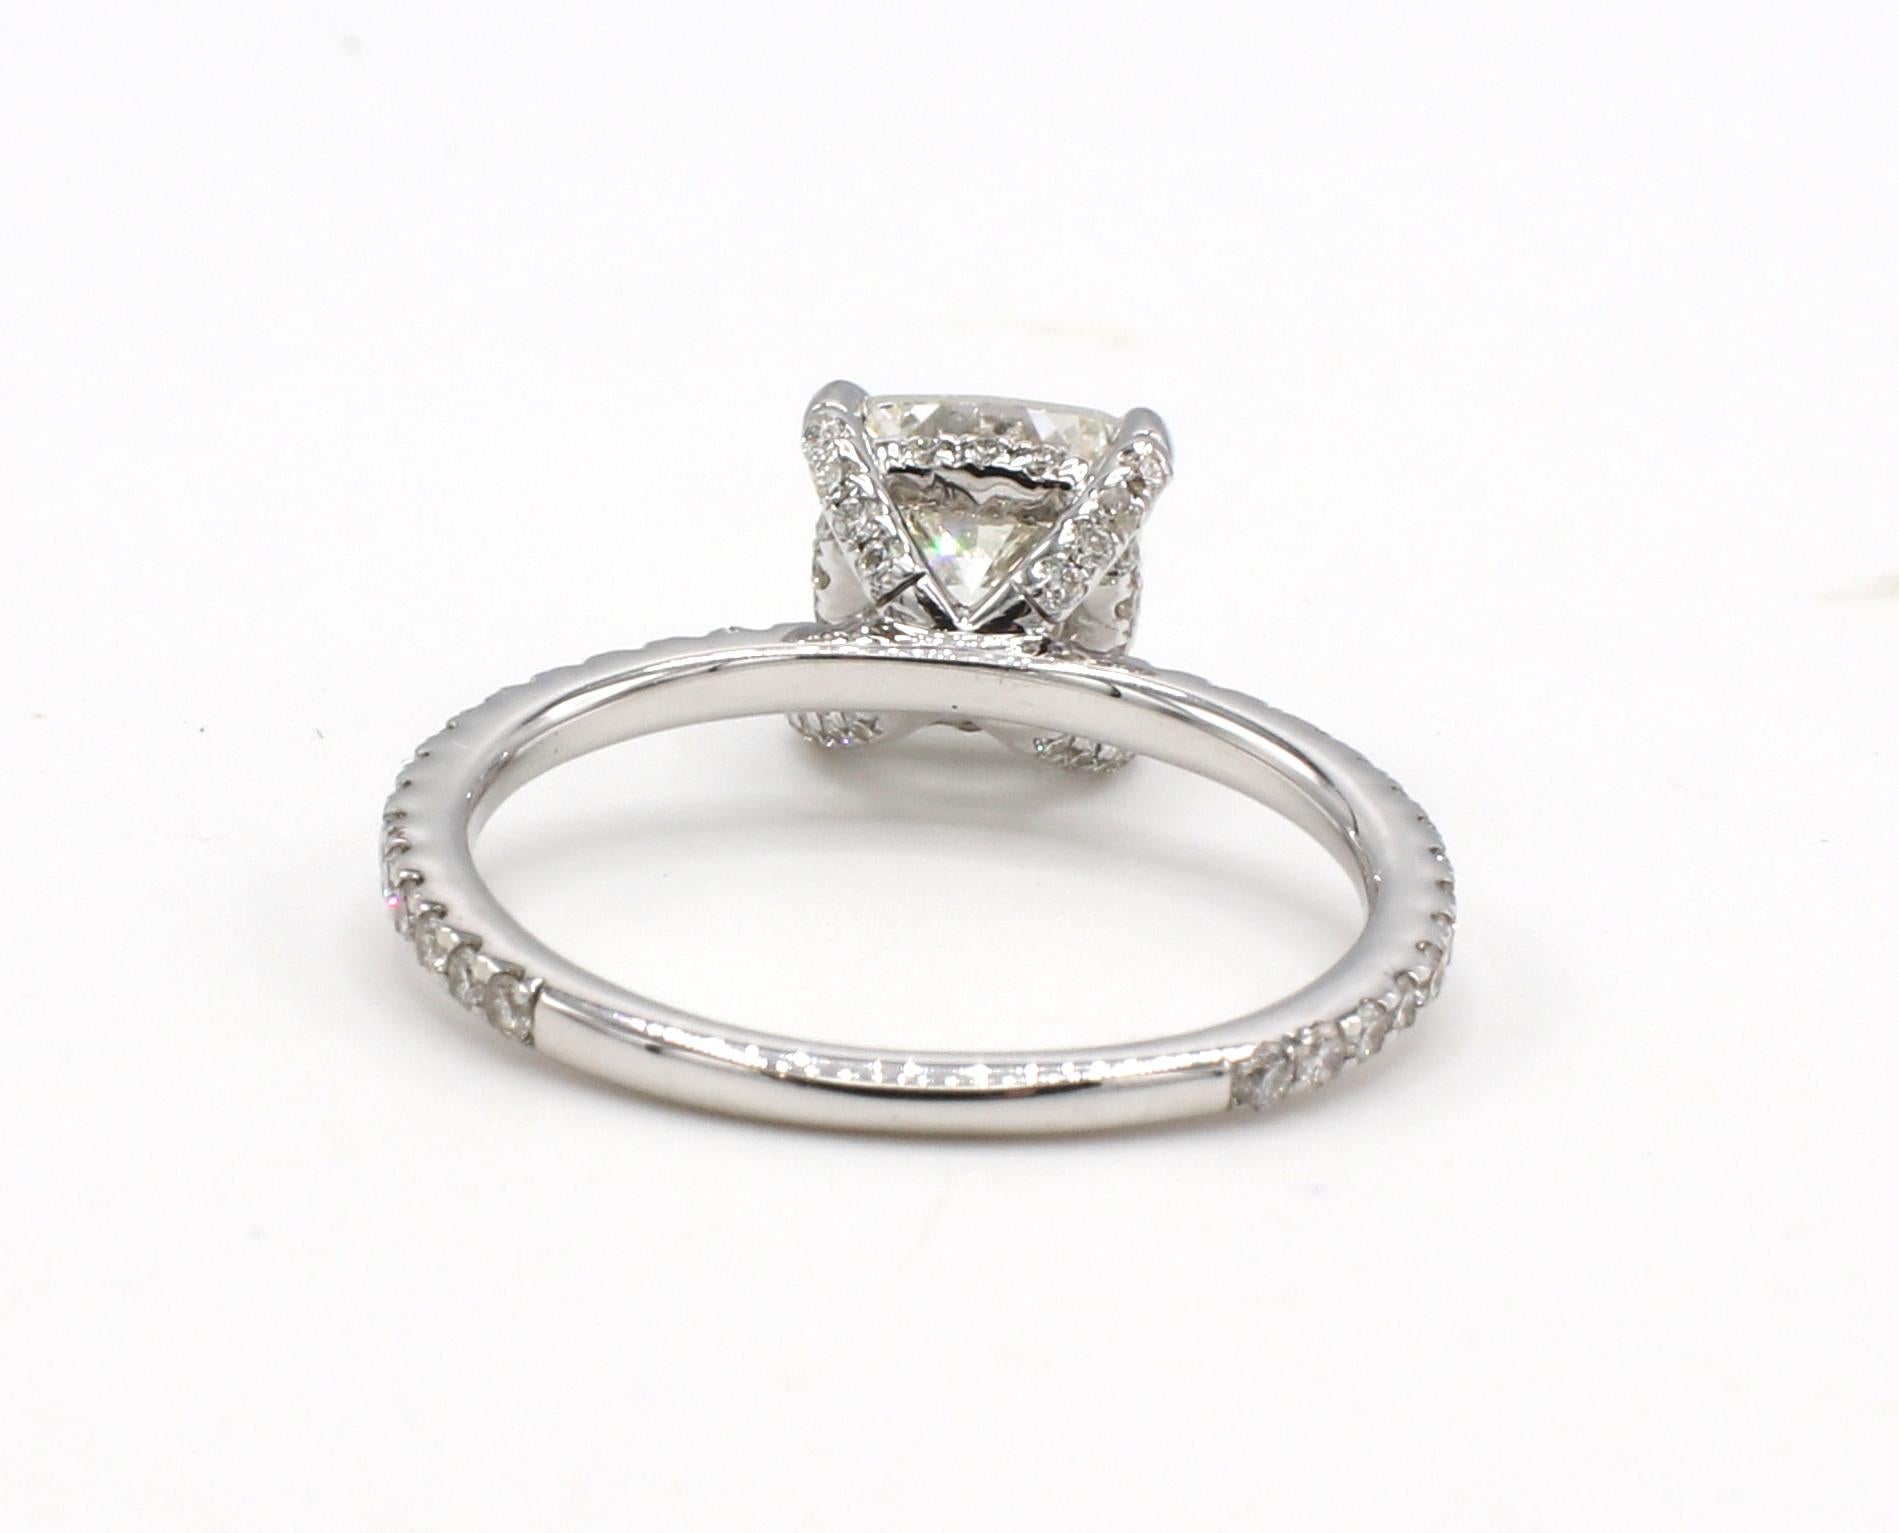 GIA Certified 1.51 Carat Cushion J SI2 Diamond Engagement Ring 
GIA report number: 1403482717
Metal: 18 Karat white gold
Weight: 2.48 grams
Diamond: 1.51 carat cushion J SI2 
Accent diamonds: Approx. .35 CTW G VS round diamonds
Size: 5.5